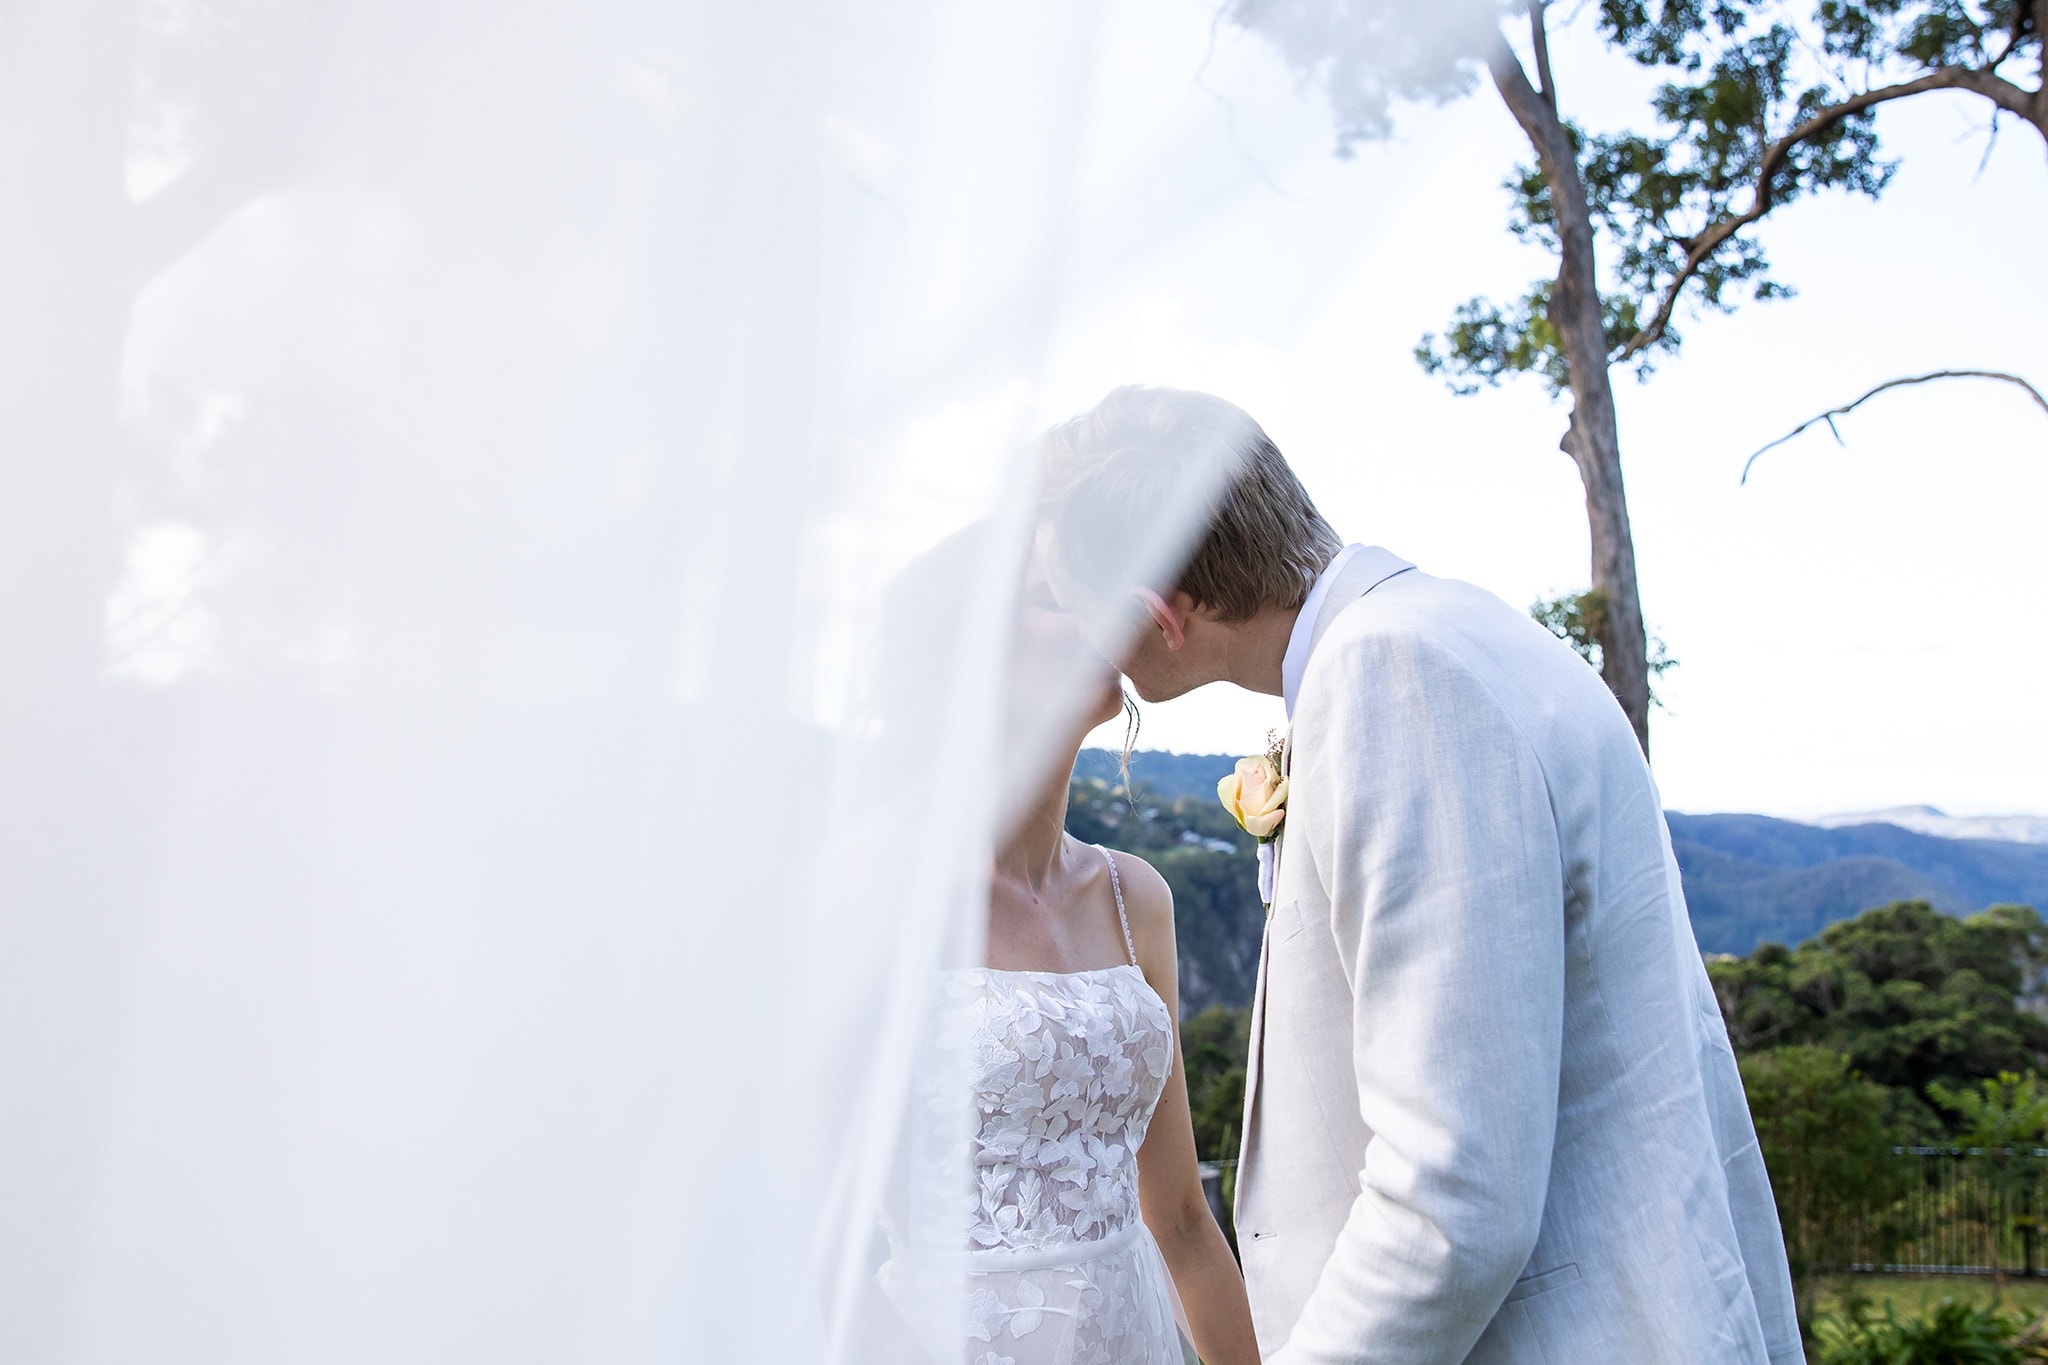 Bride and groom under wedding veil.